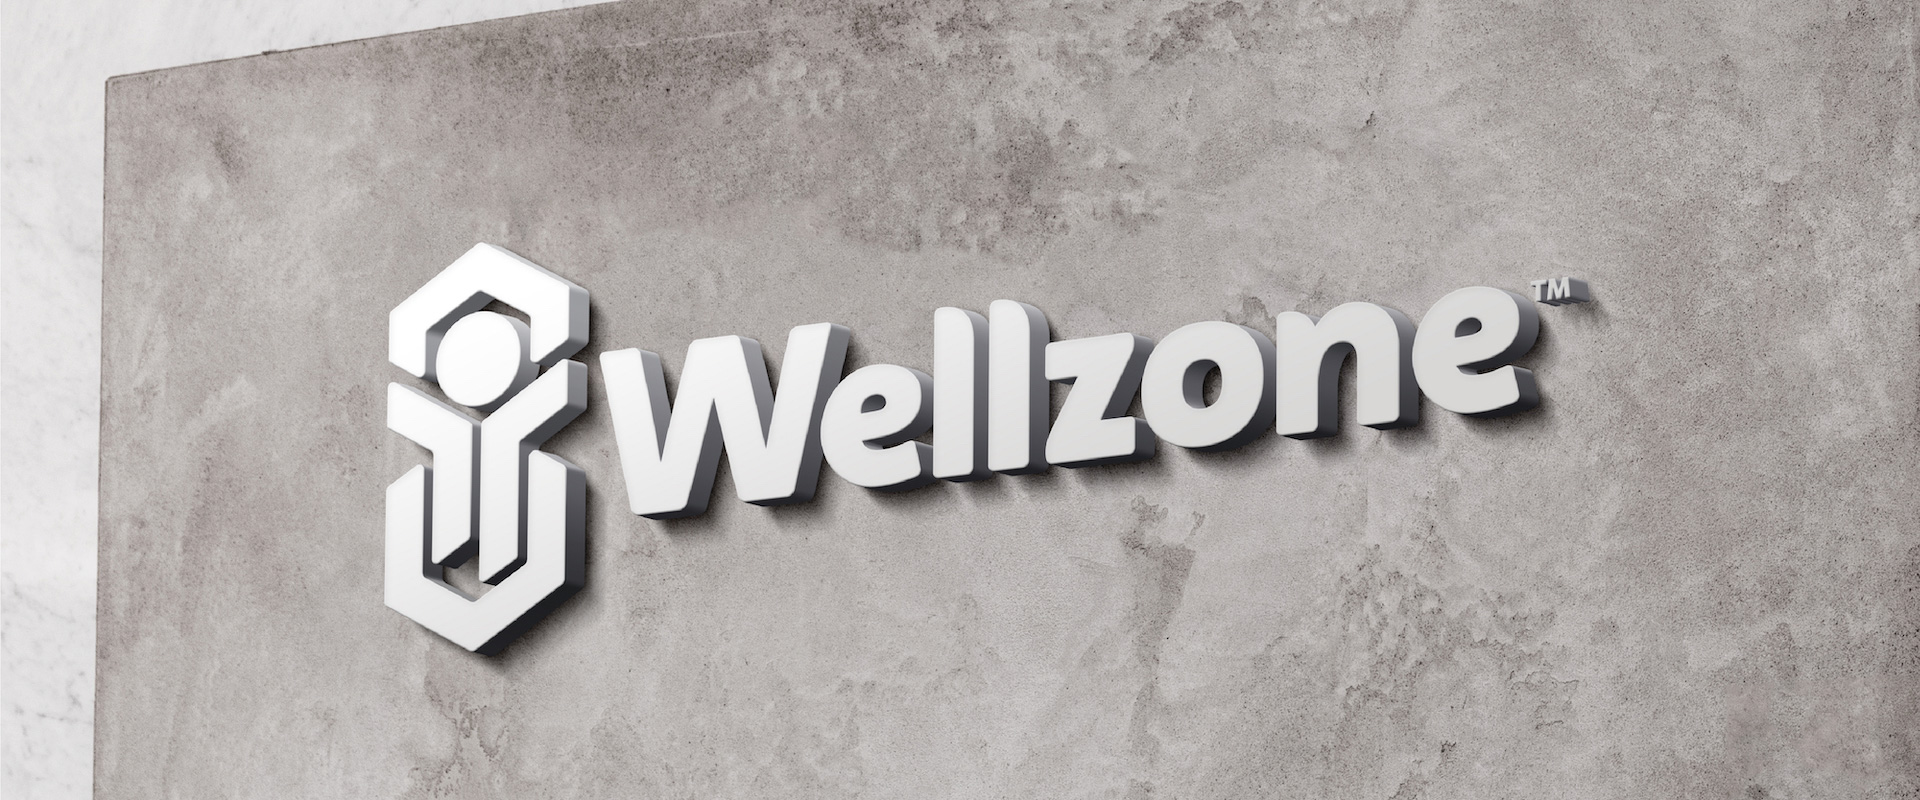 Wellzone - KONSEPTIZ Advertising Agency in Turkey